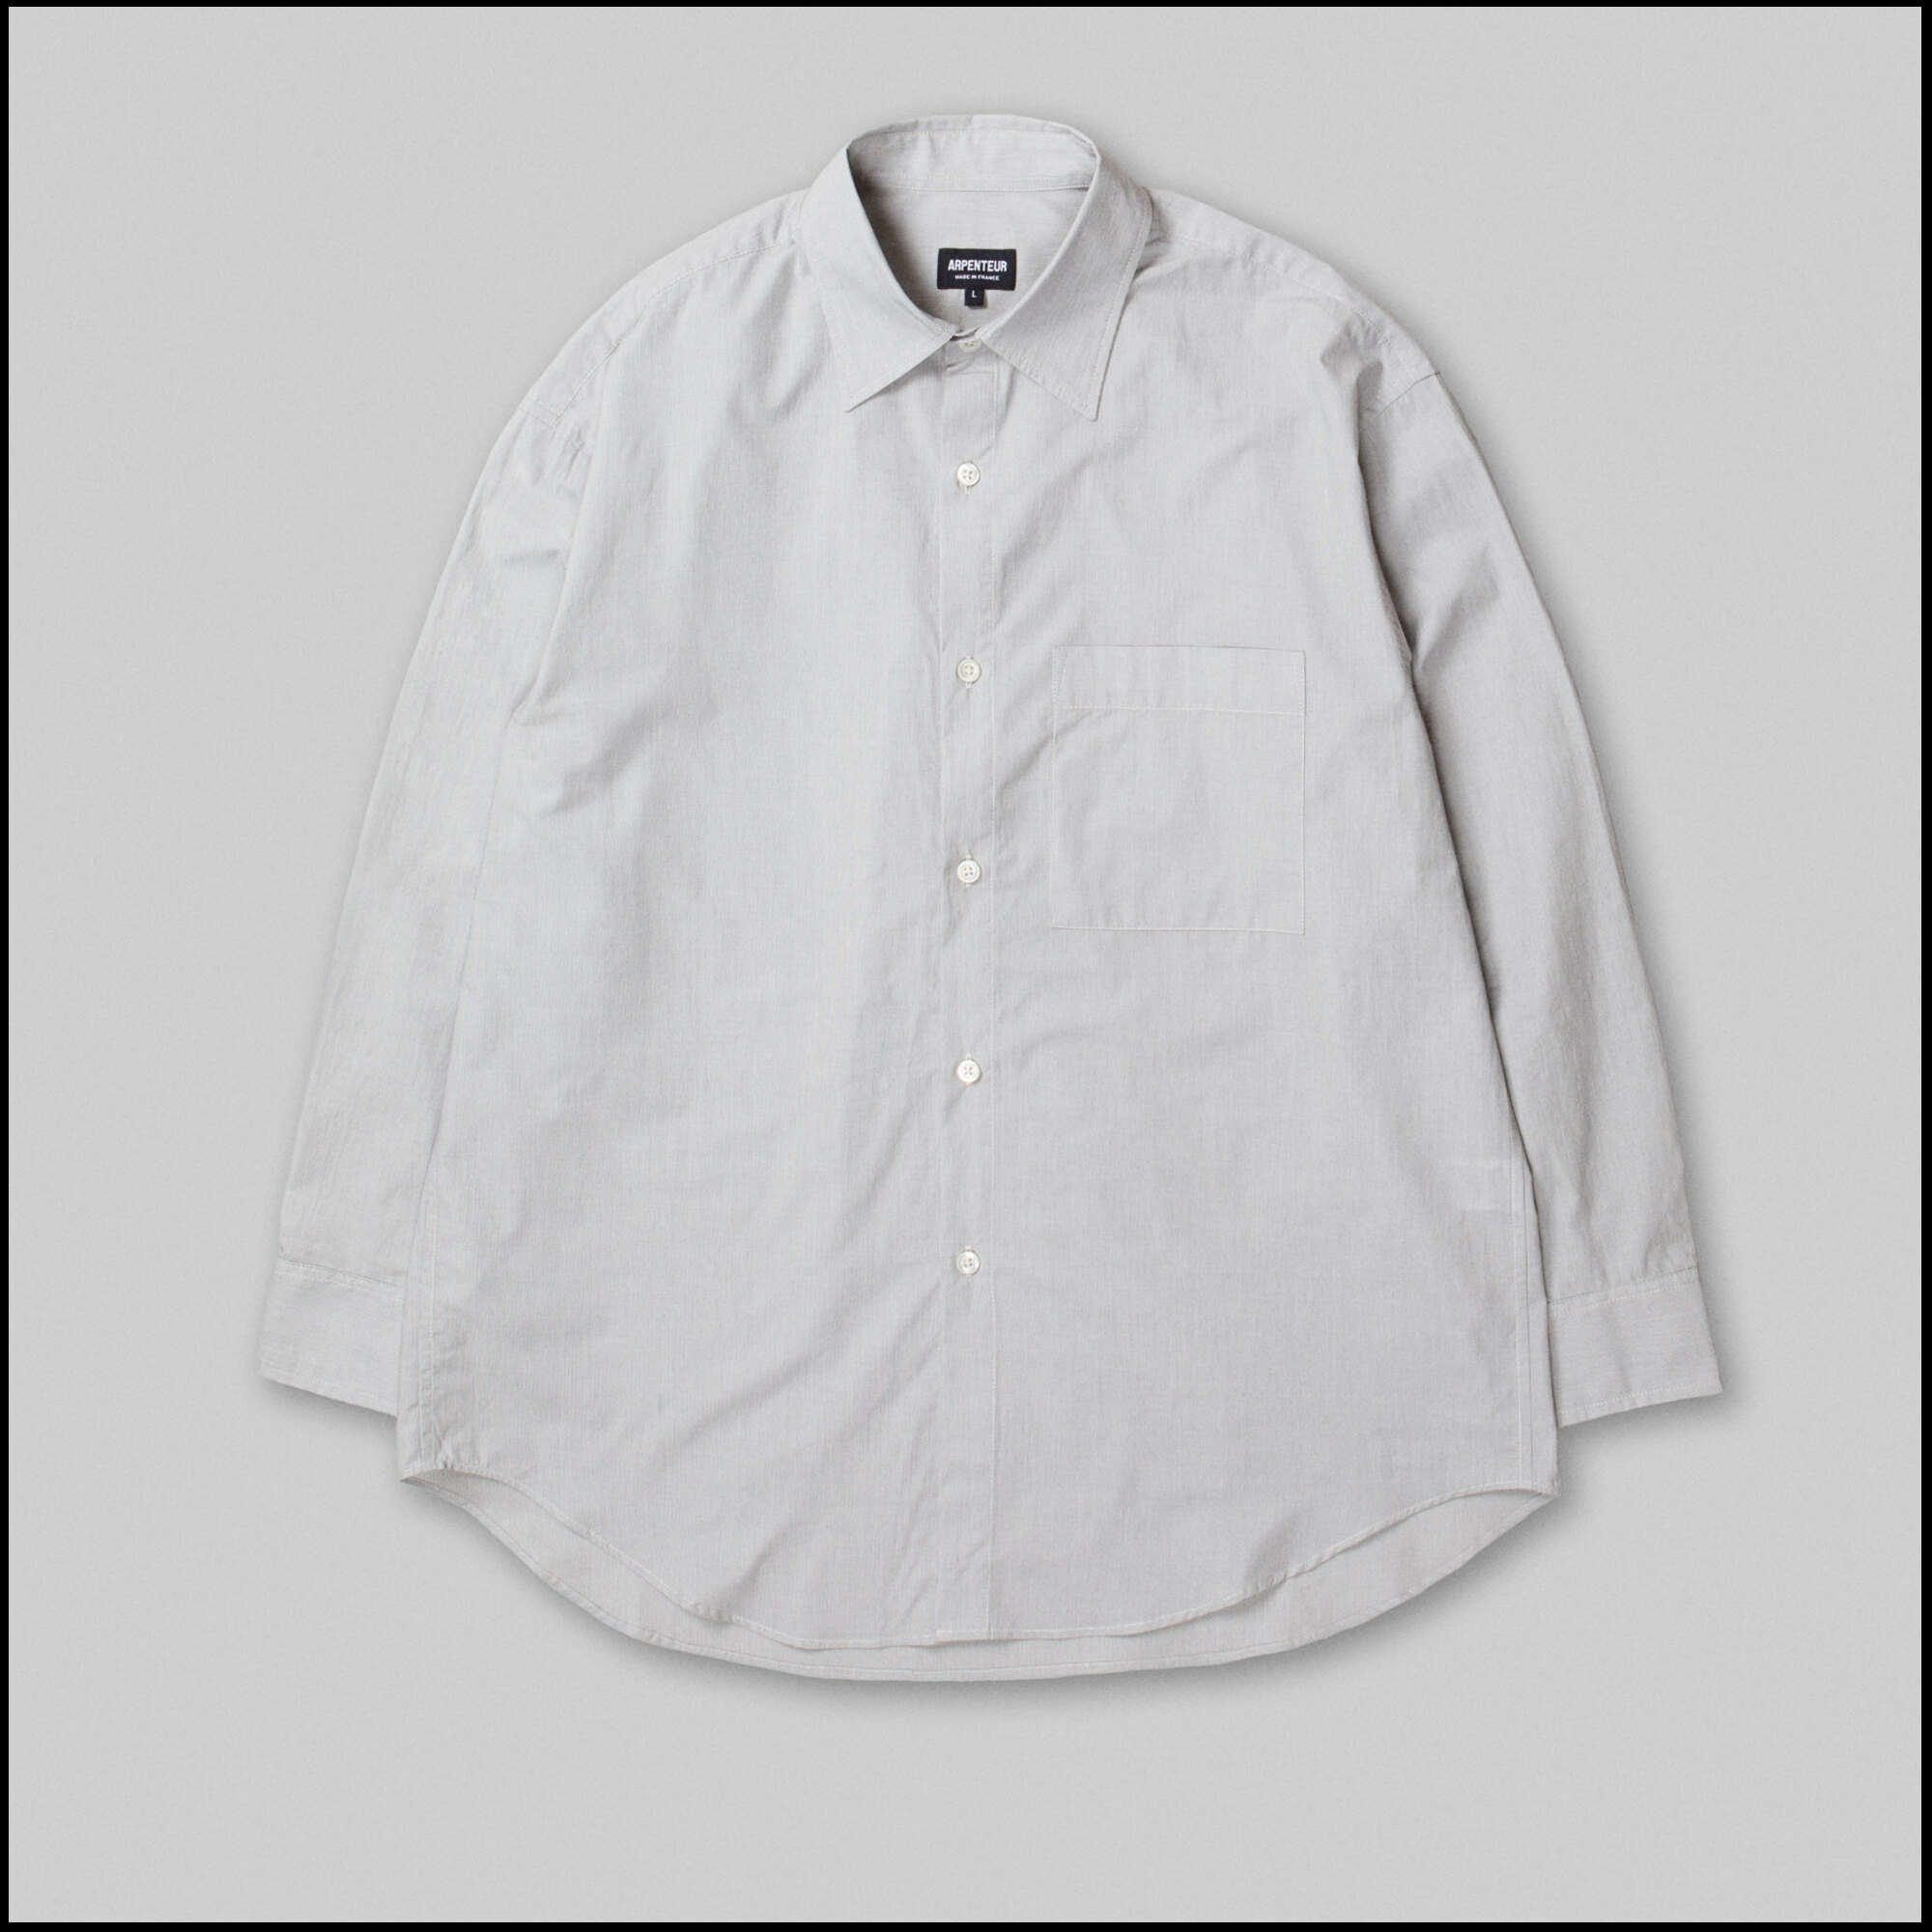 DORIS shirt by Arpenteur in Grey color